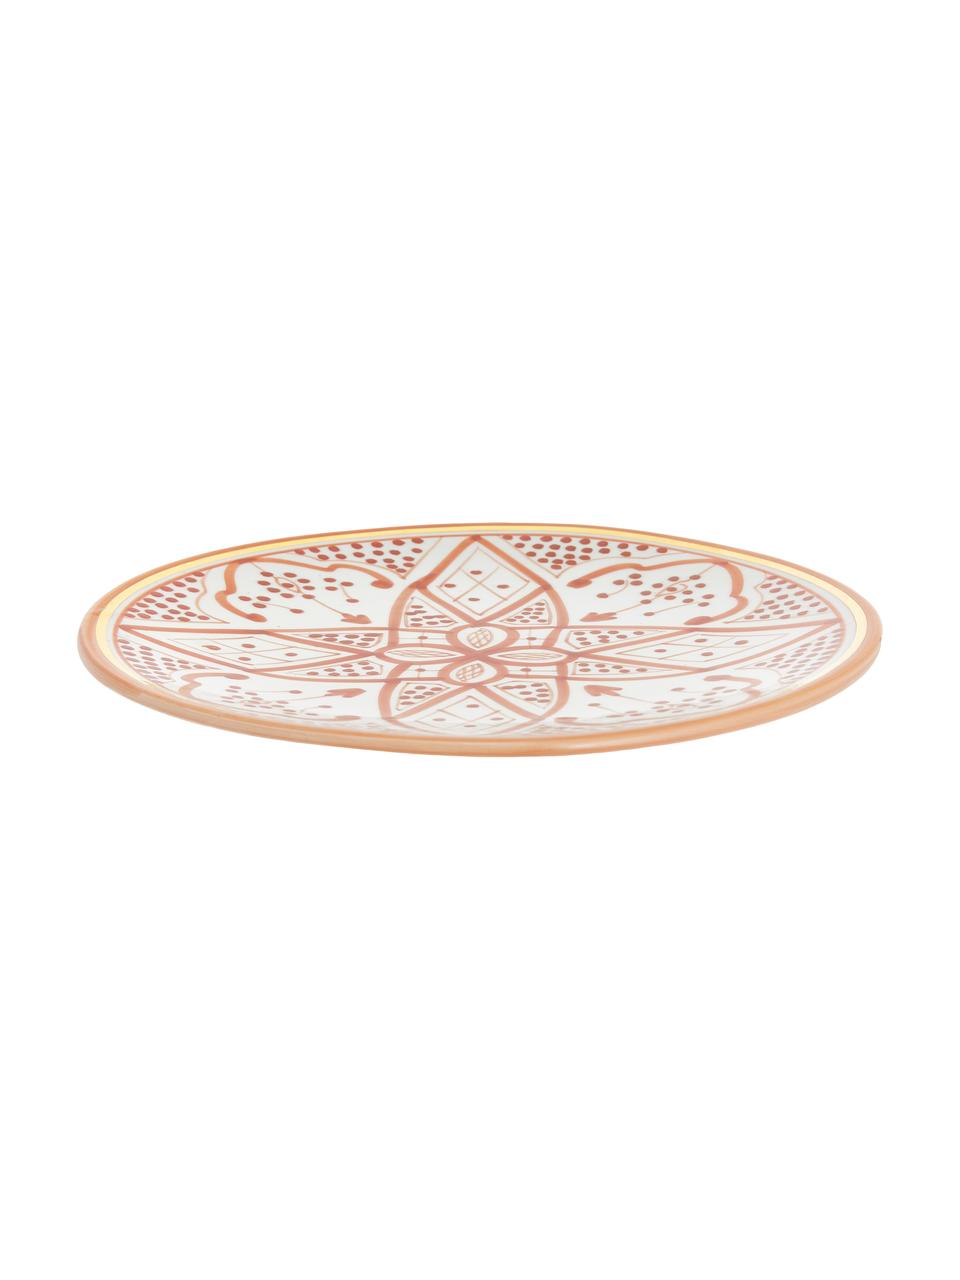 Handgemaakt Marokkaans dinerbord Beldi met gouden rand, Keramiek, Oranje, crèmekleurig, goudkleurig, Ø 26 x H 2 cm